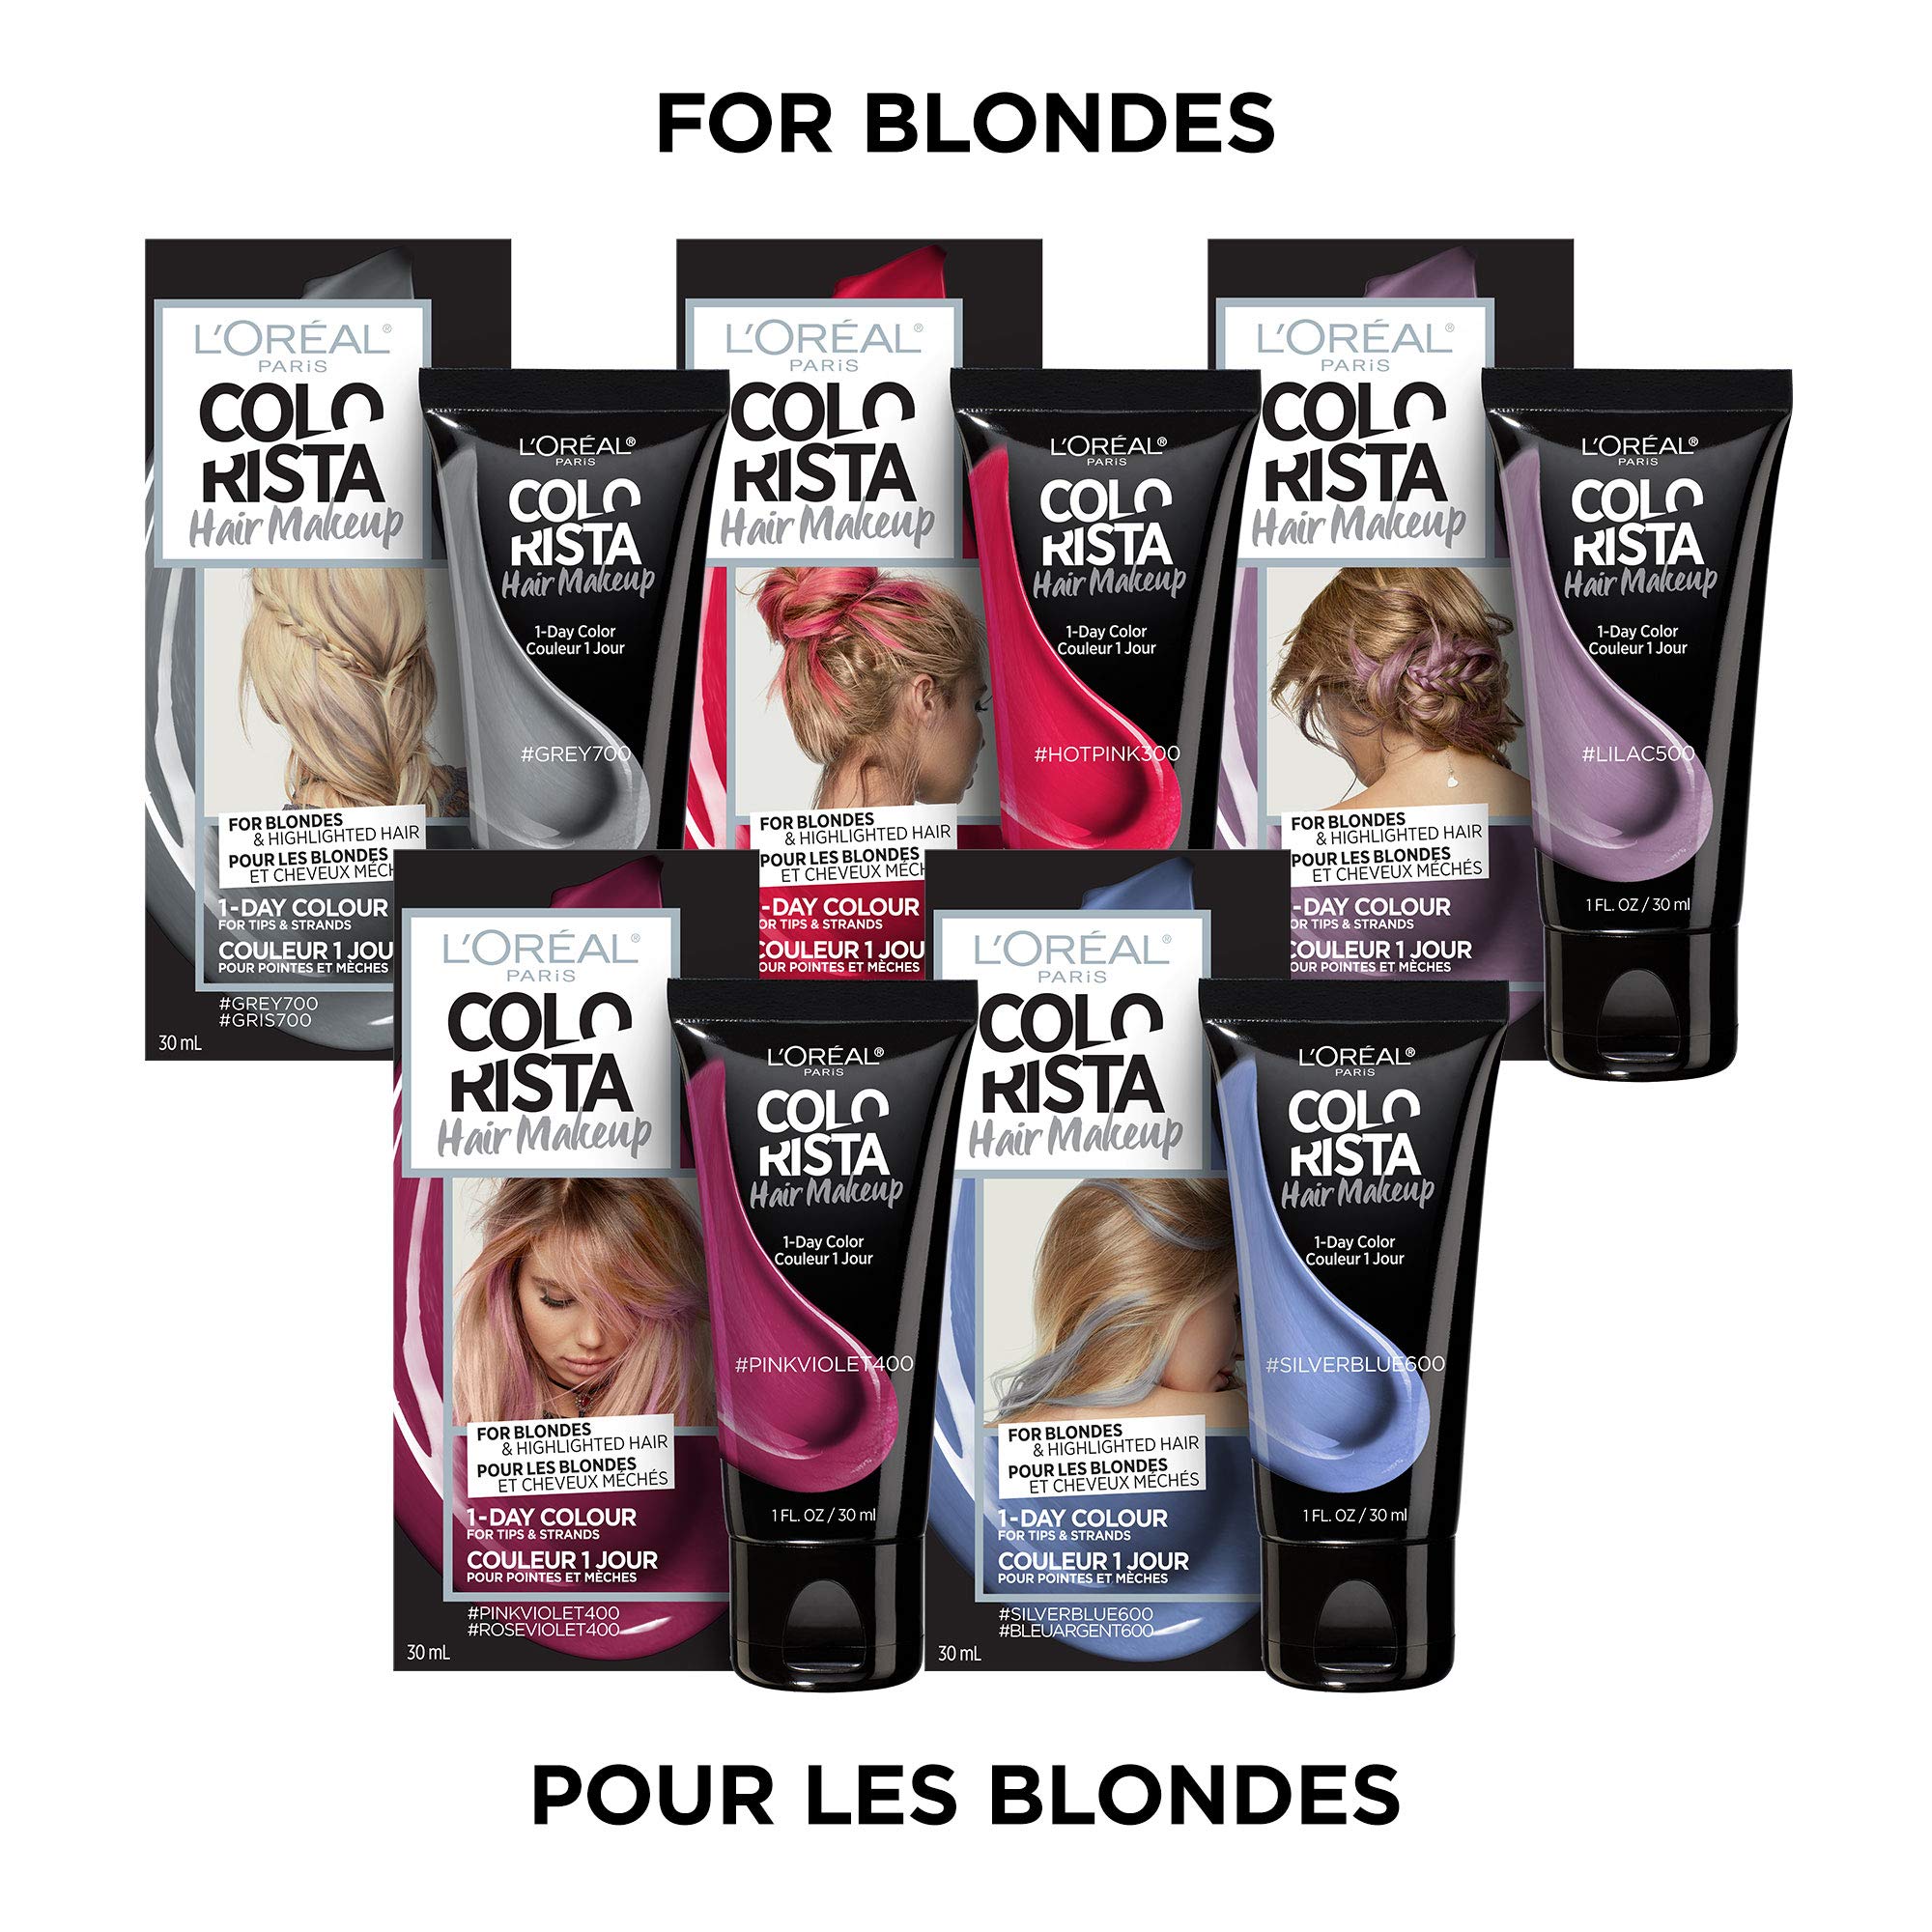 L'oreal Paris Hair Color Colorista Makeup 1-day for Blondes, Neon Green 100, 1 Fluid Ounce